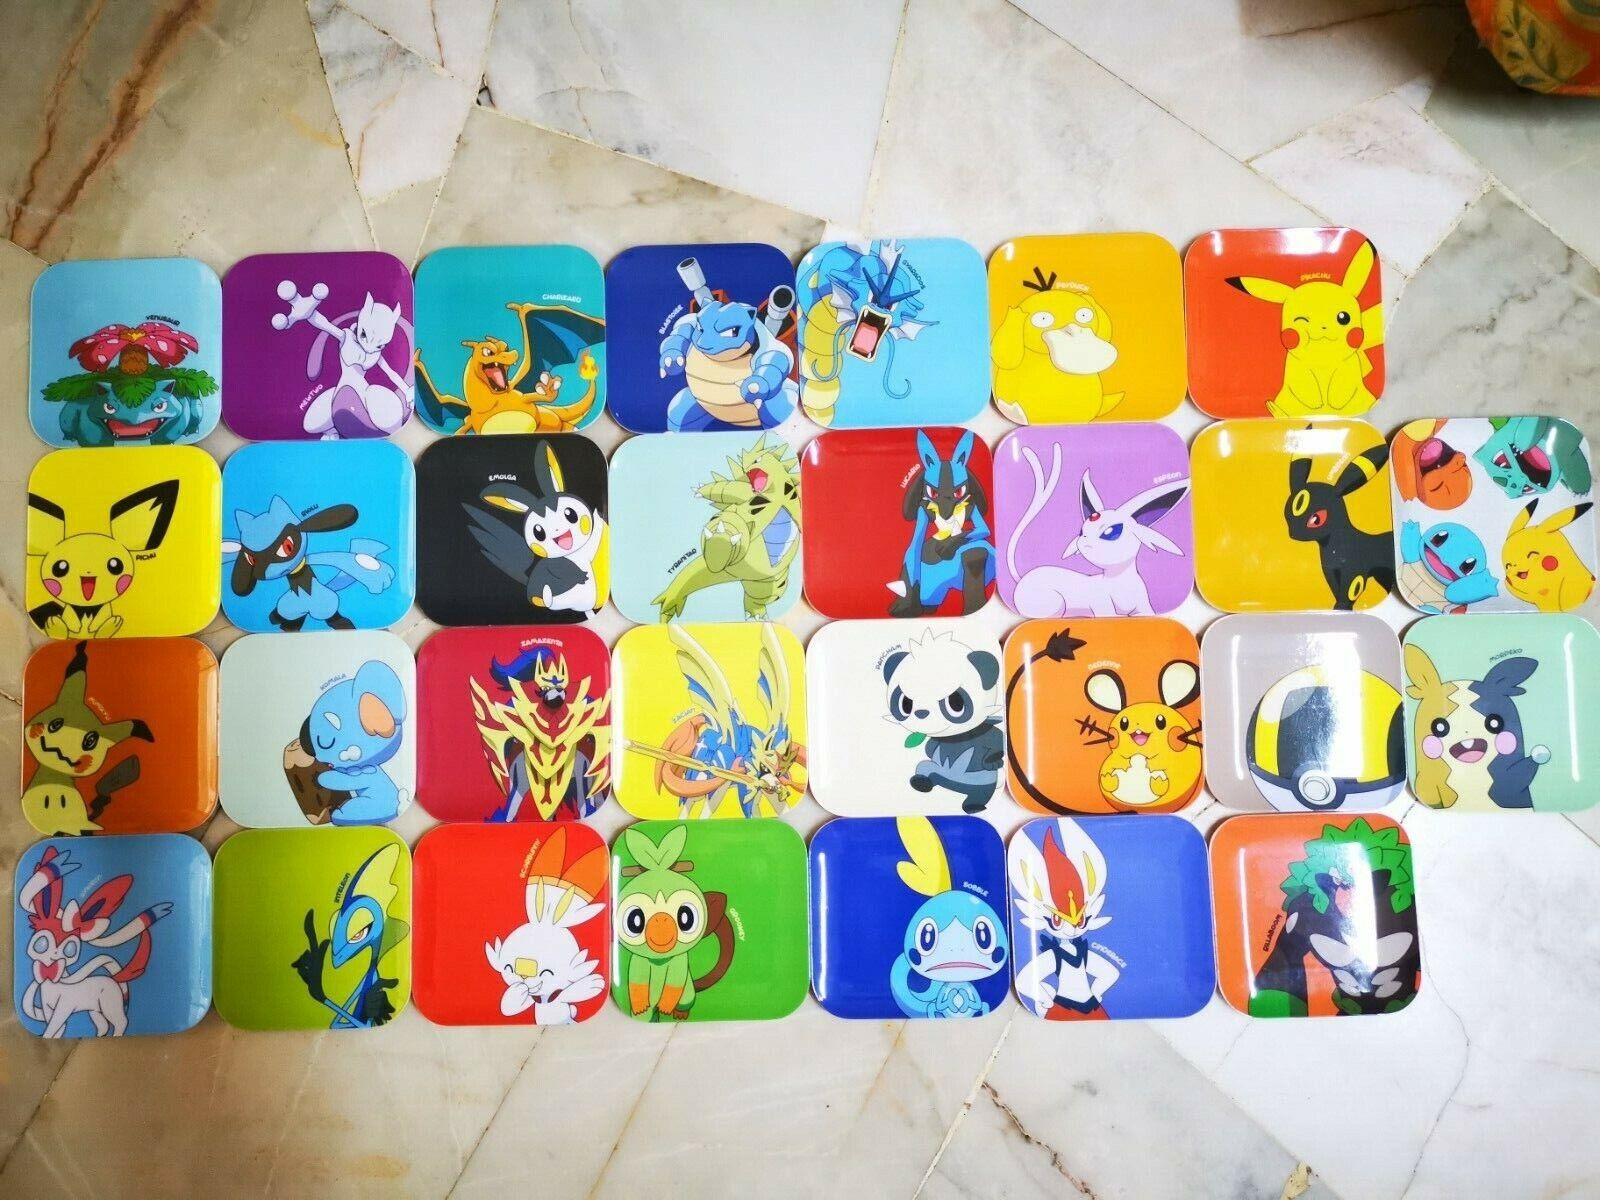 30 Pokemon Asia Plates RARE Limited Edition Collectible Pokémon Collector Item